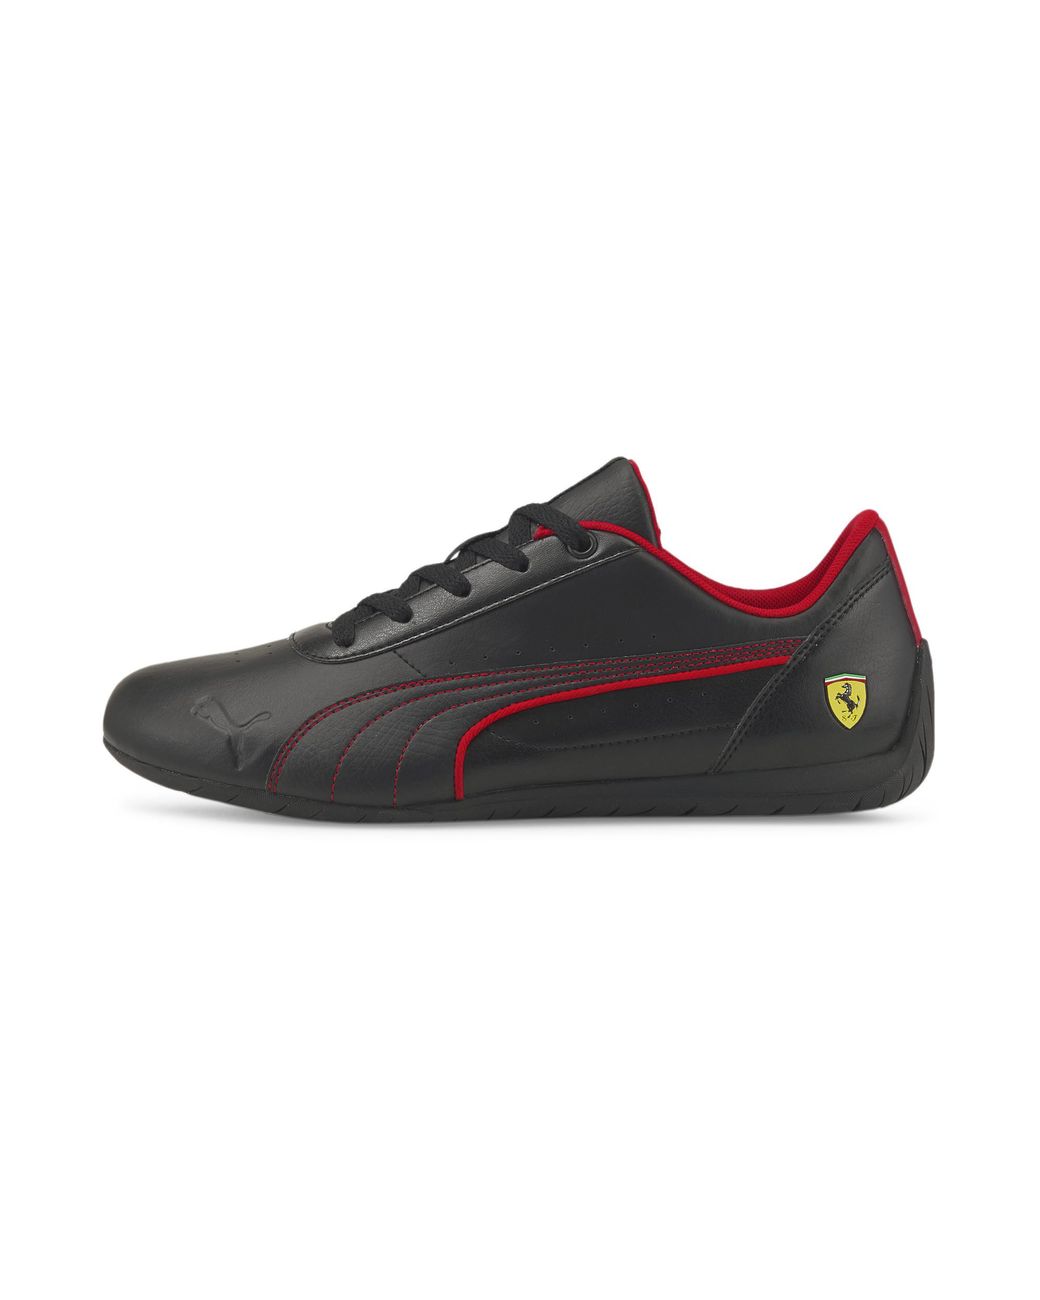 PUMA Scuderia Ferrari Neo Cat Motorsport Shoes in Black | Lyst